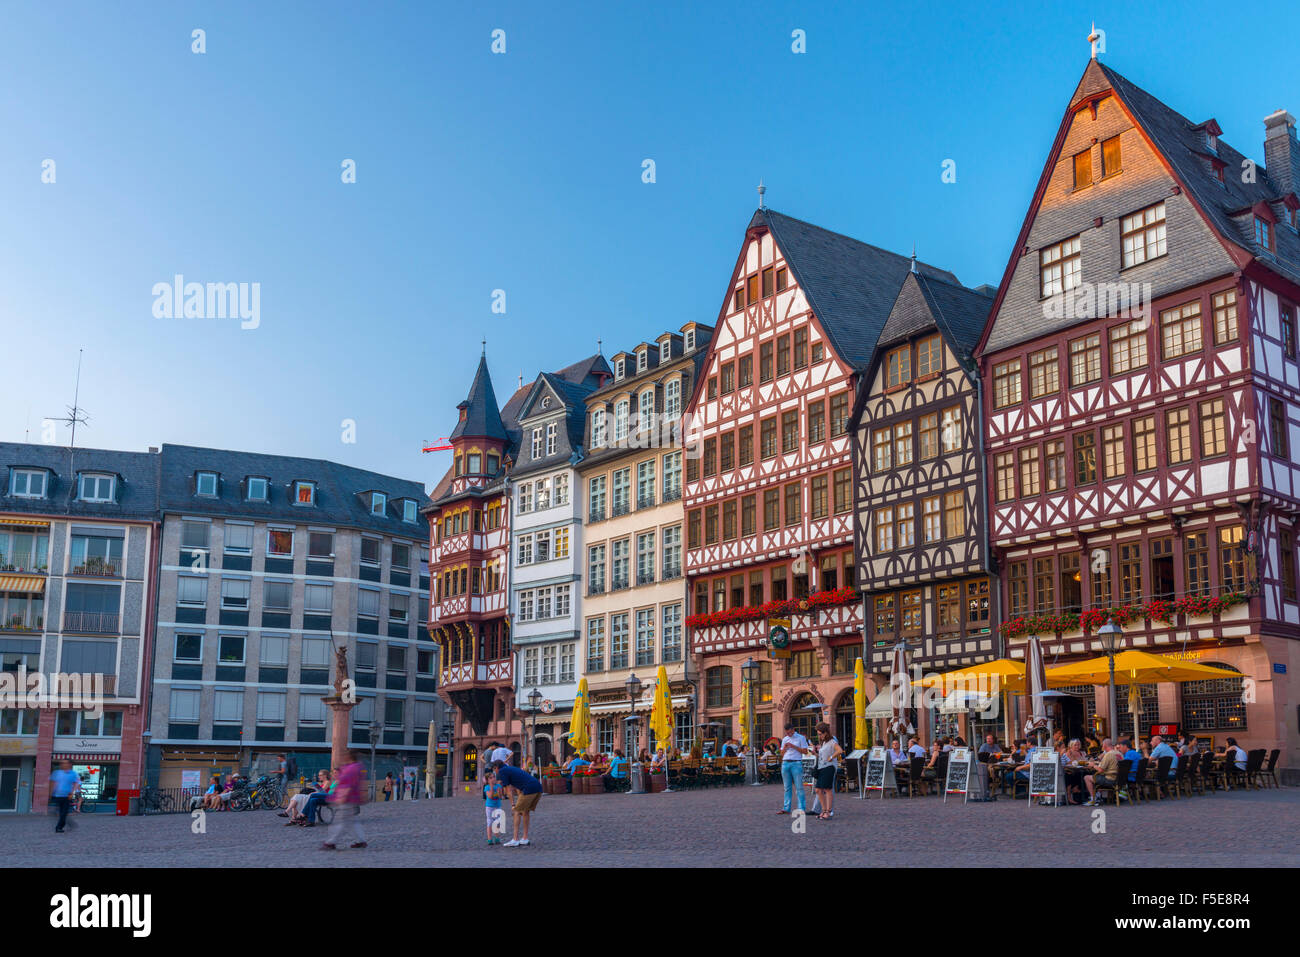 Romerberg, Altstadt (Old Town), Frankfurt am Main, Hesse, Germany, Europe Stock Photo